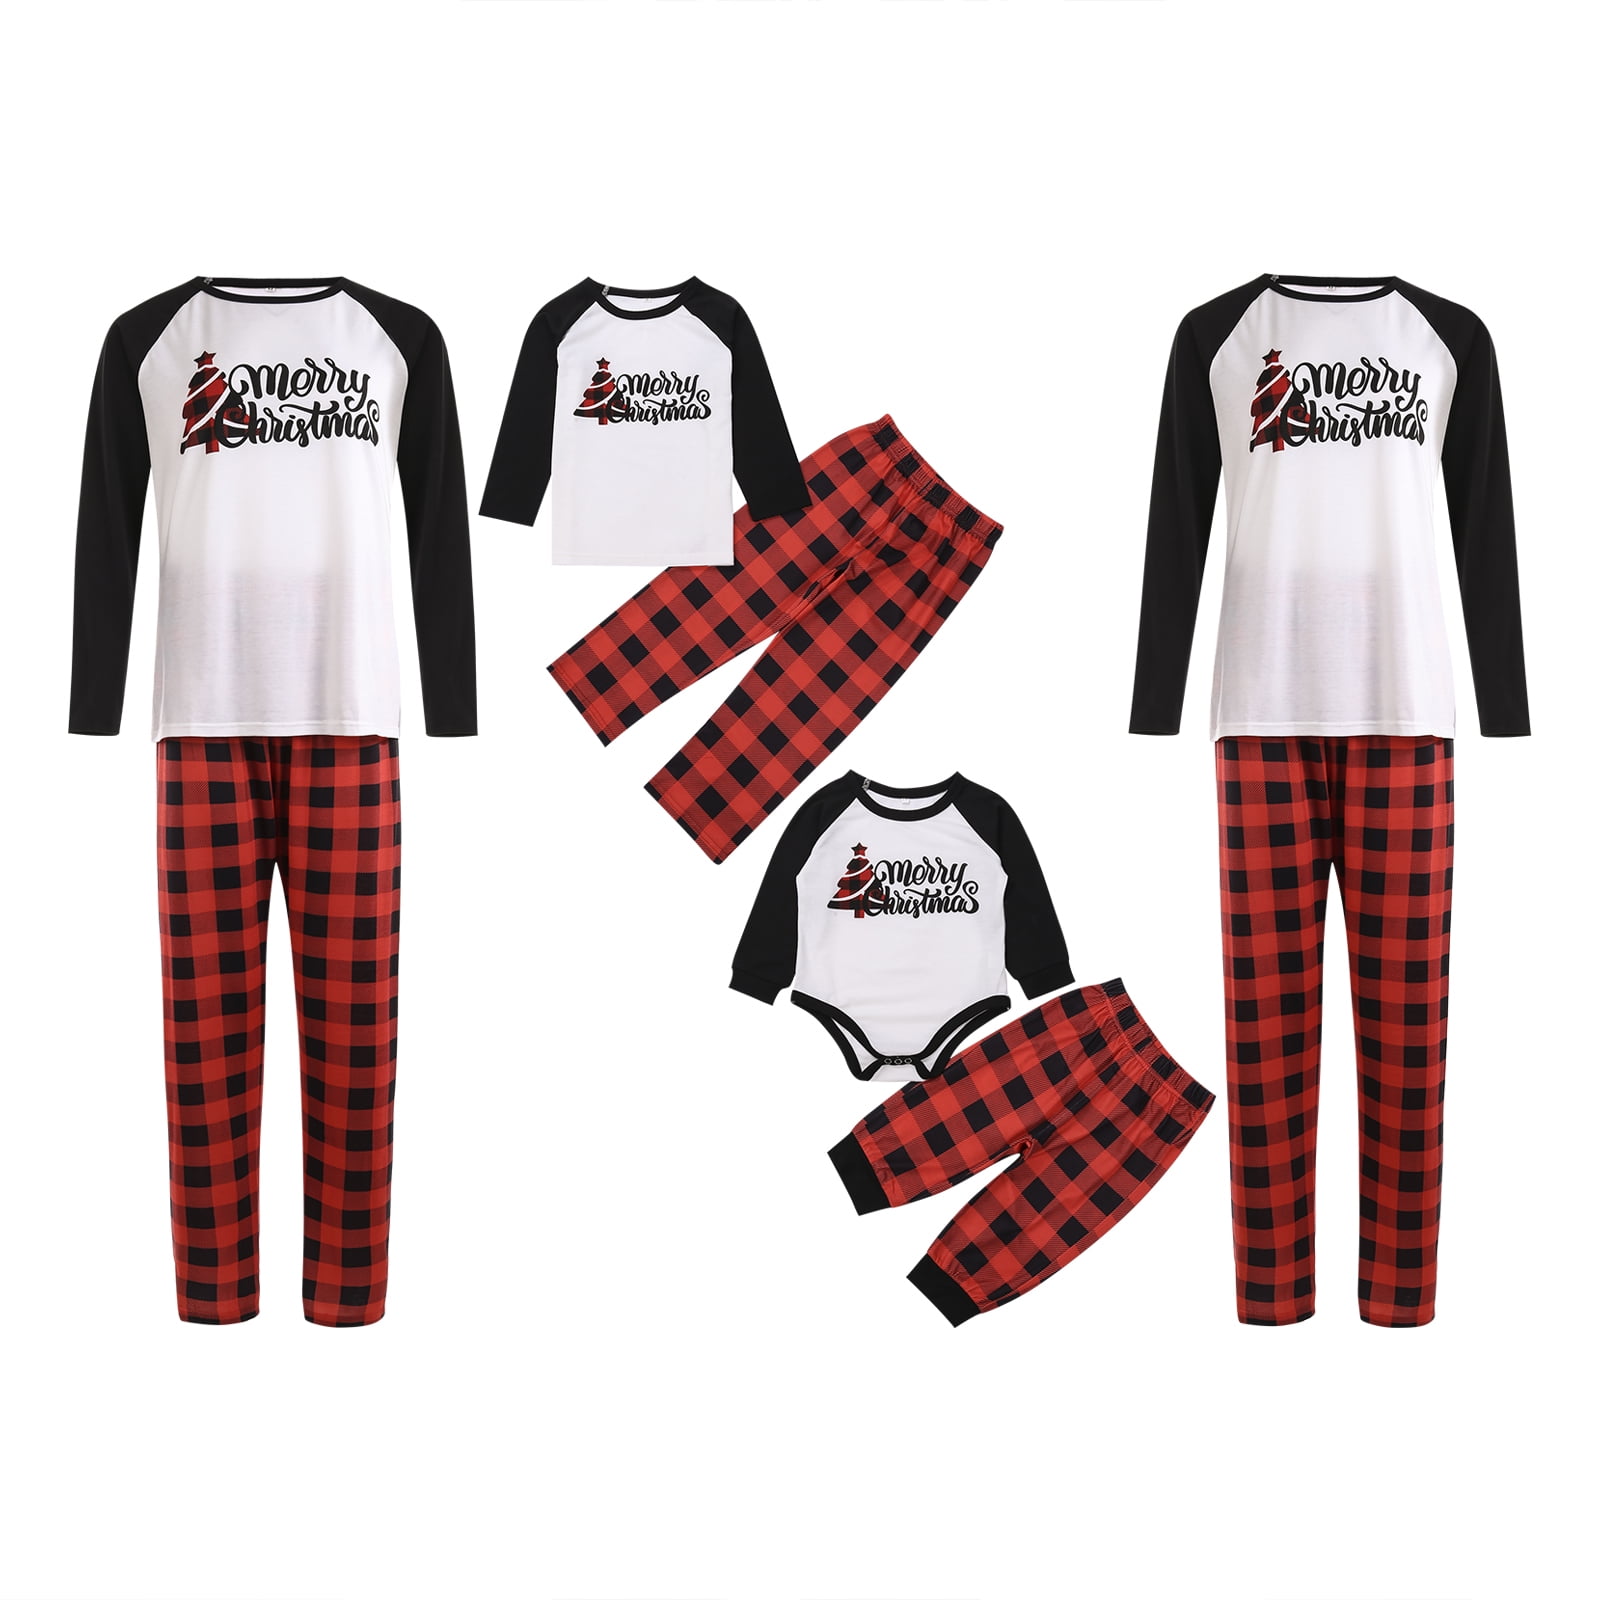 CARETOO Matching Family Pajamas Sets Long Sleeve Christmas Reindeer Plaid Pjs Striped Kids Holiday Sleepwear Homewear 